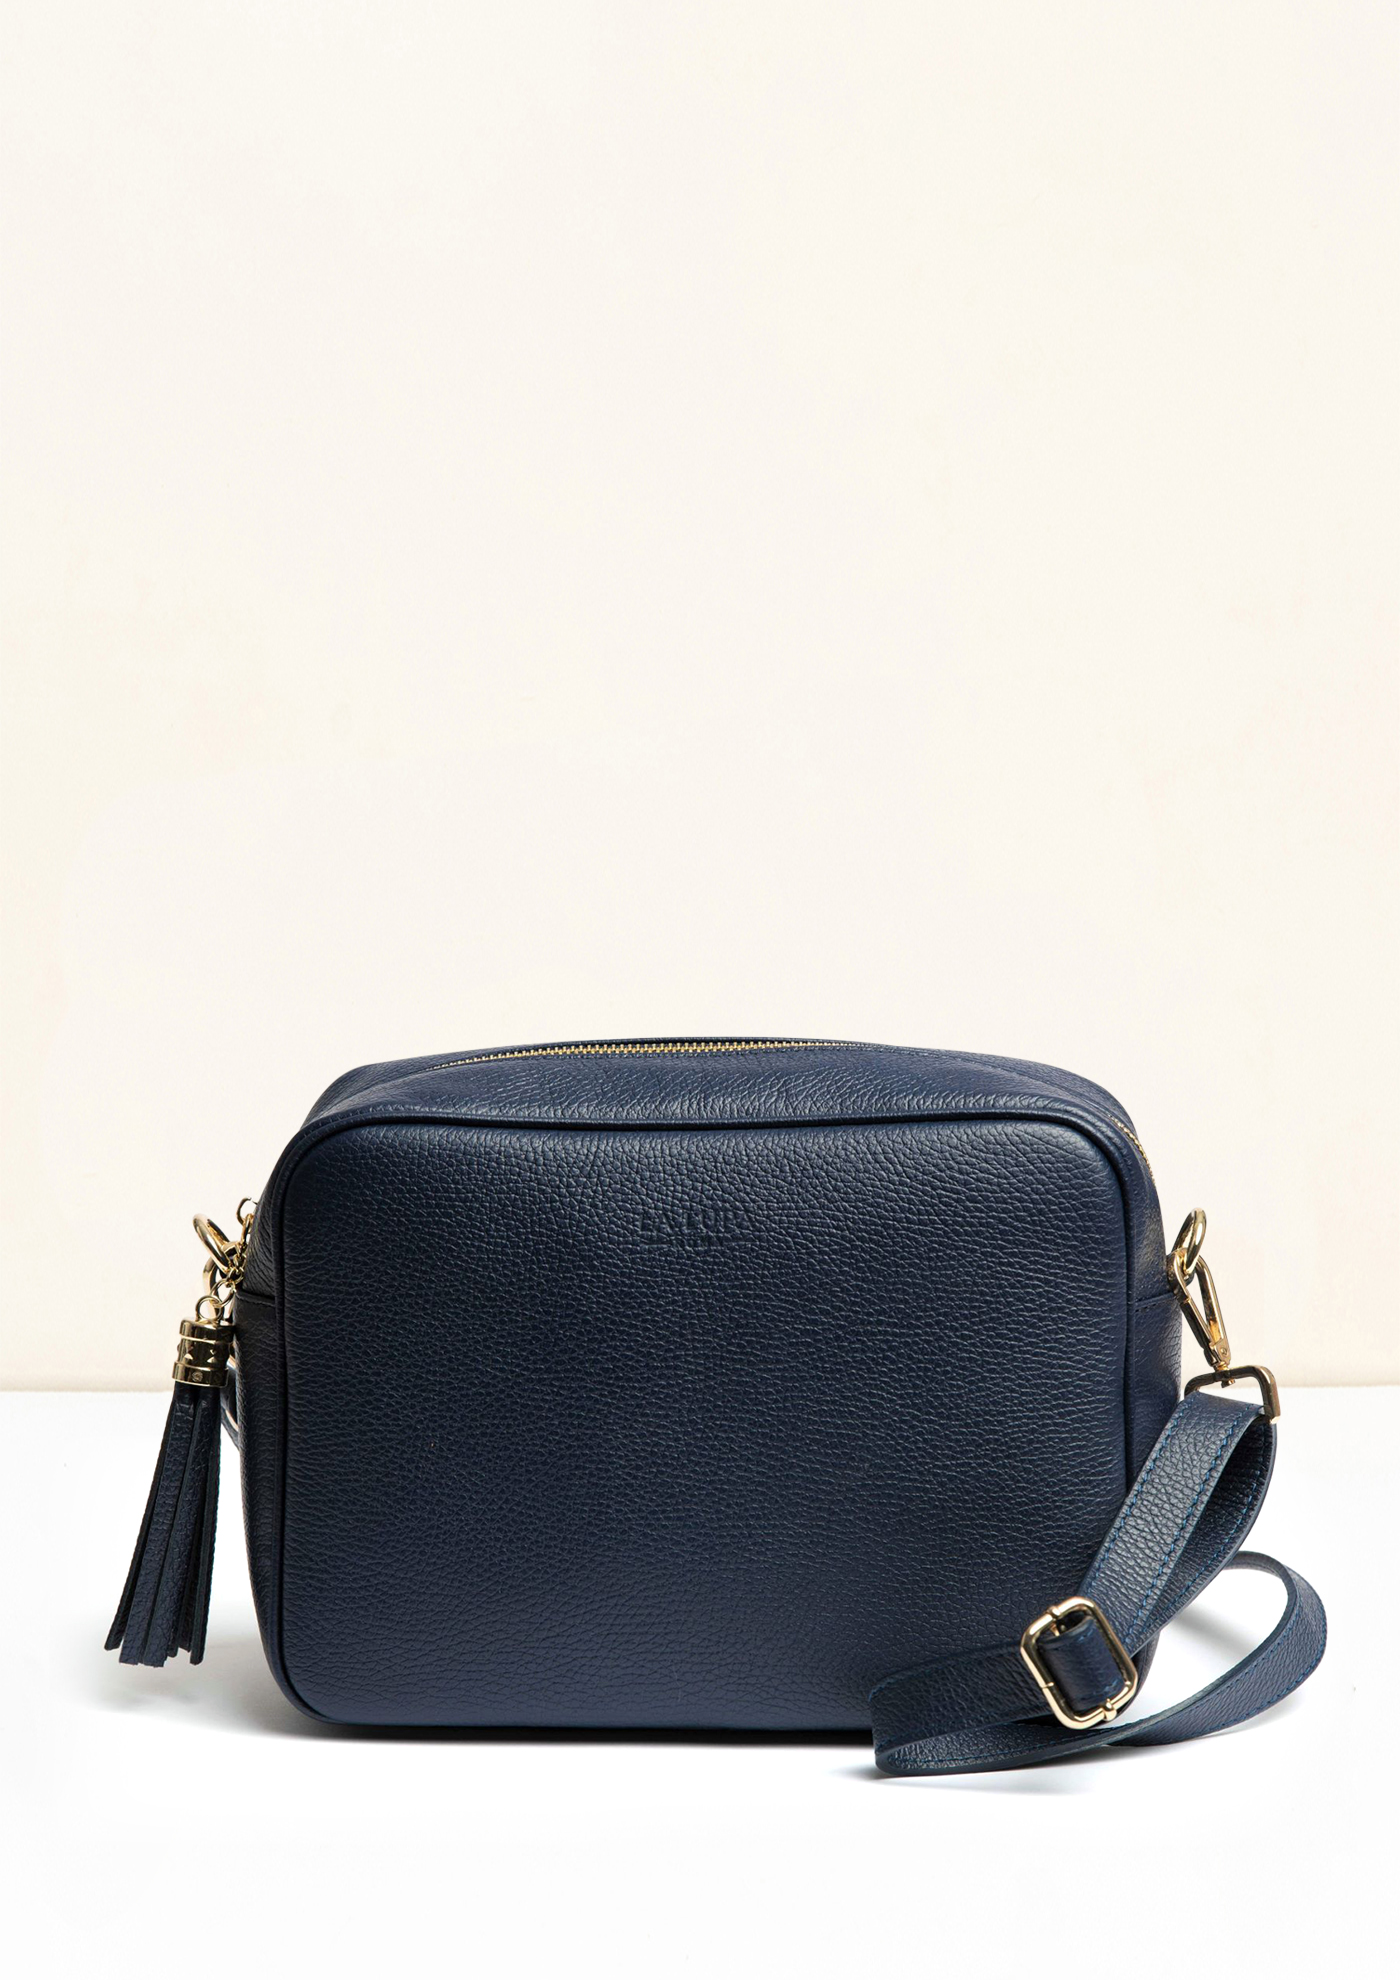 Allegra Crossbody - Navy - LA LUPA Italian leather handbags